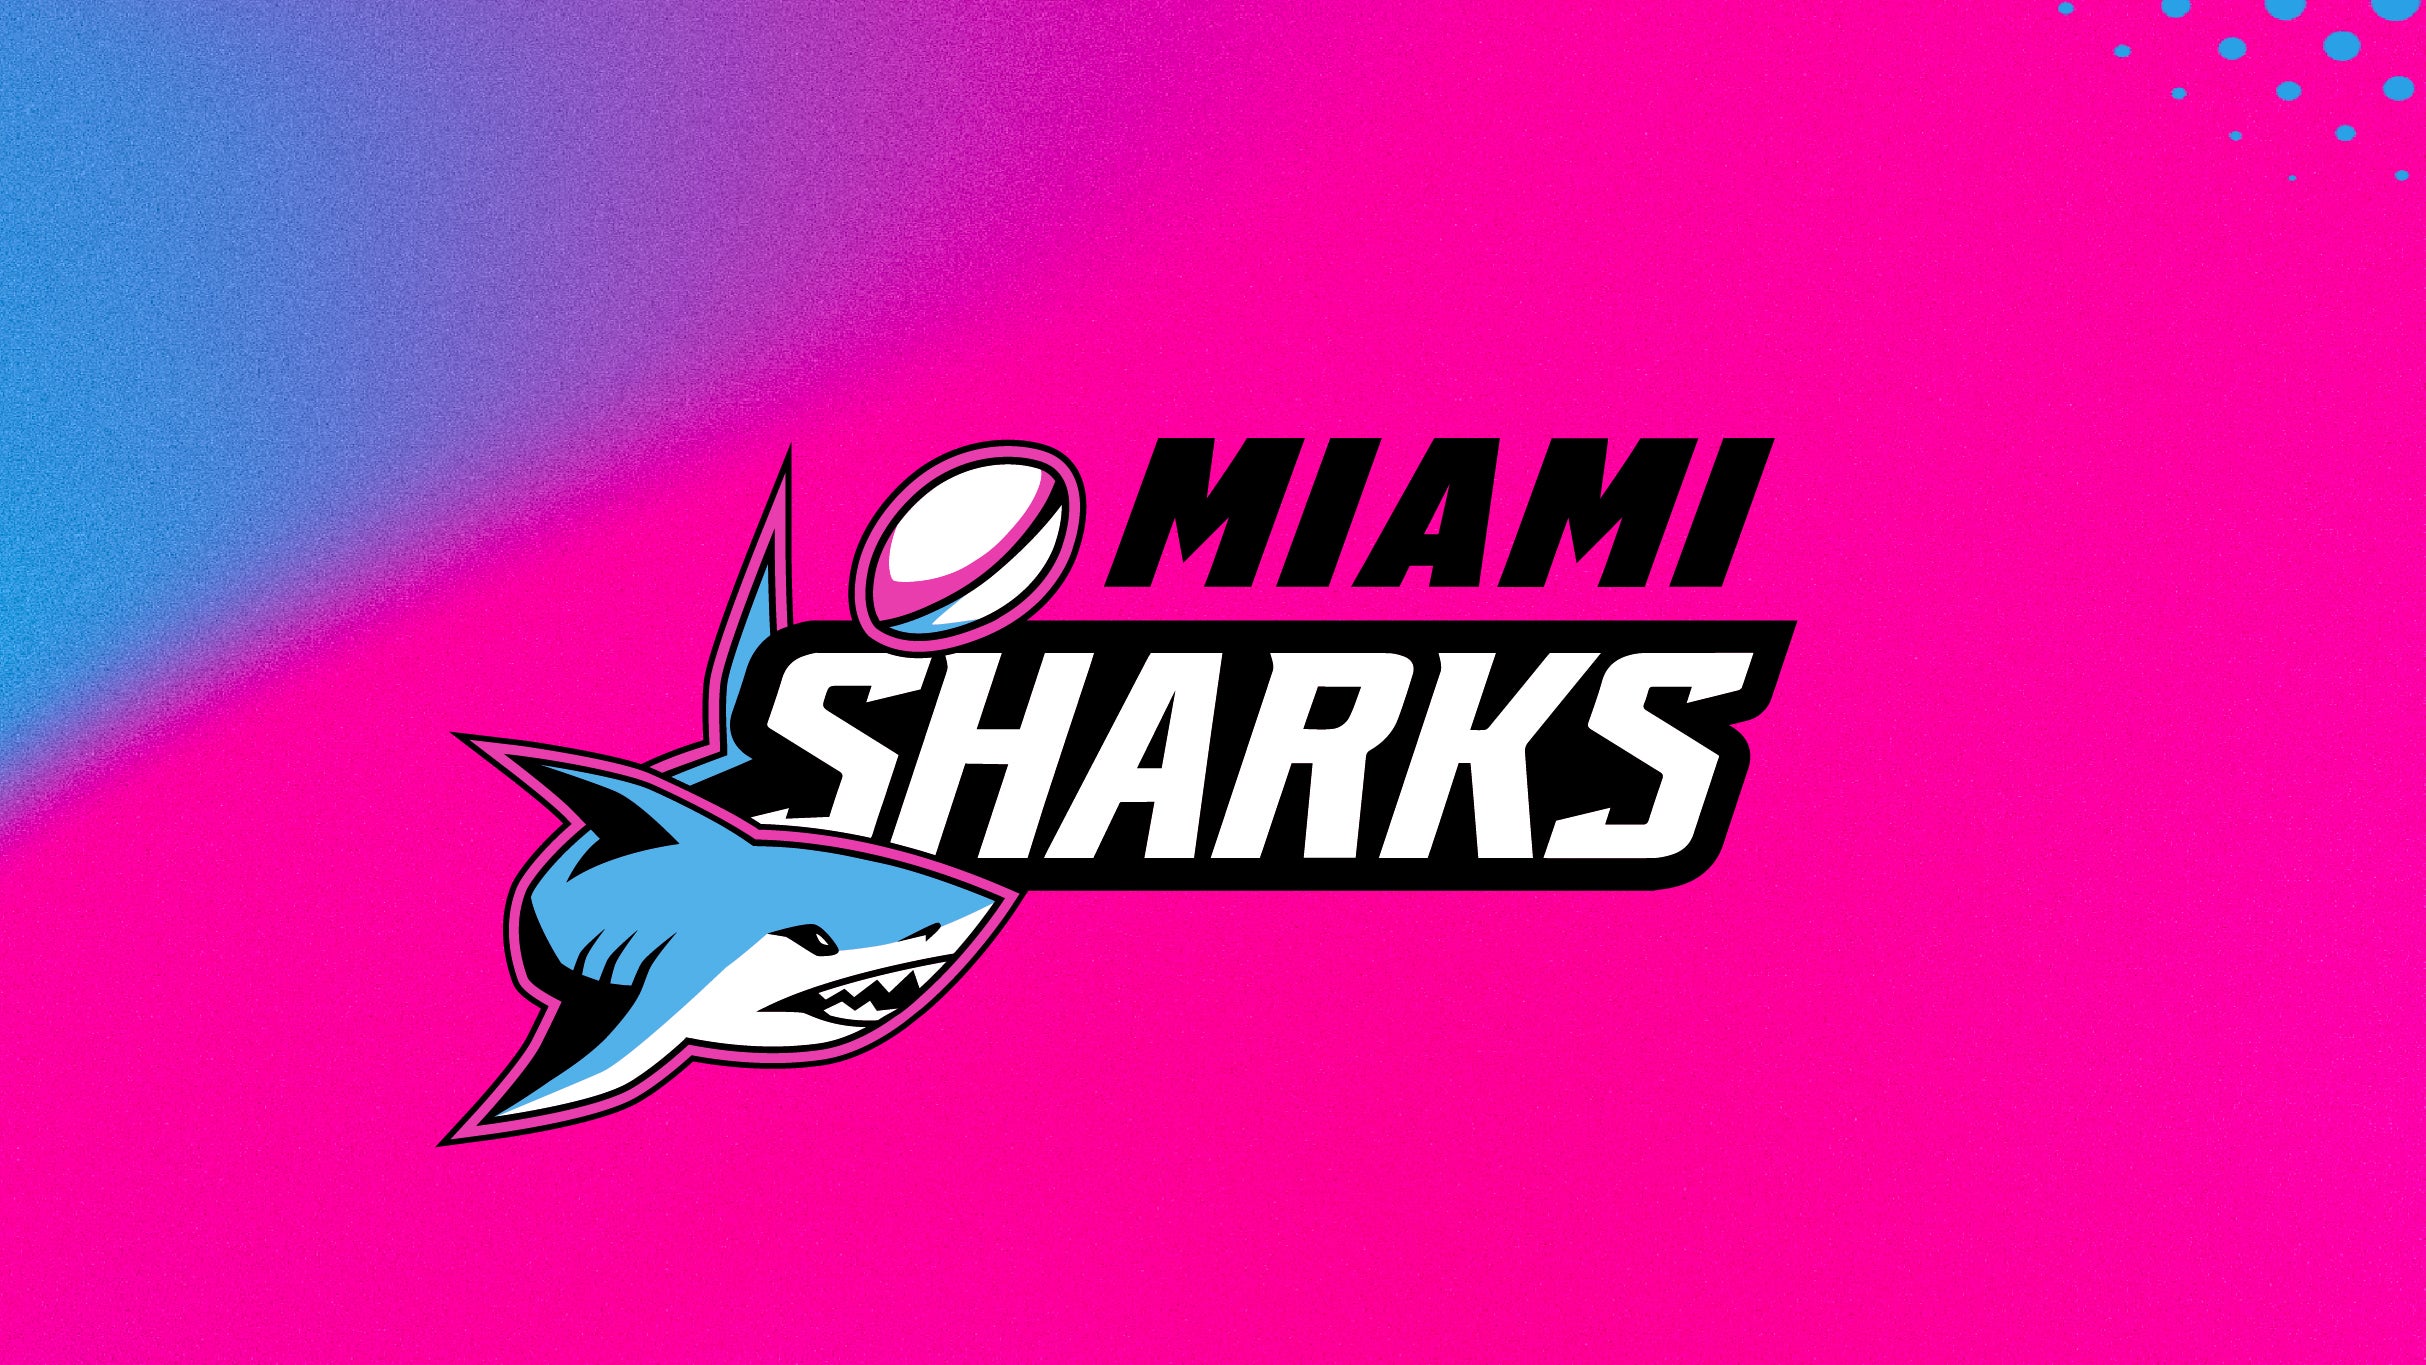 Miami Sharks vs New England Free Jacks presales in Fort Lauderdale